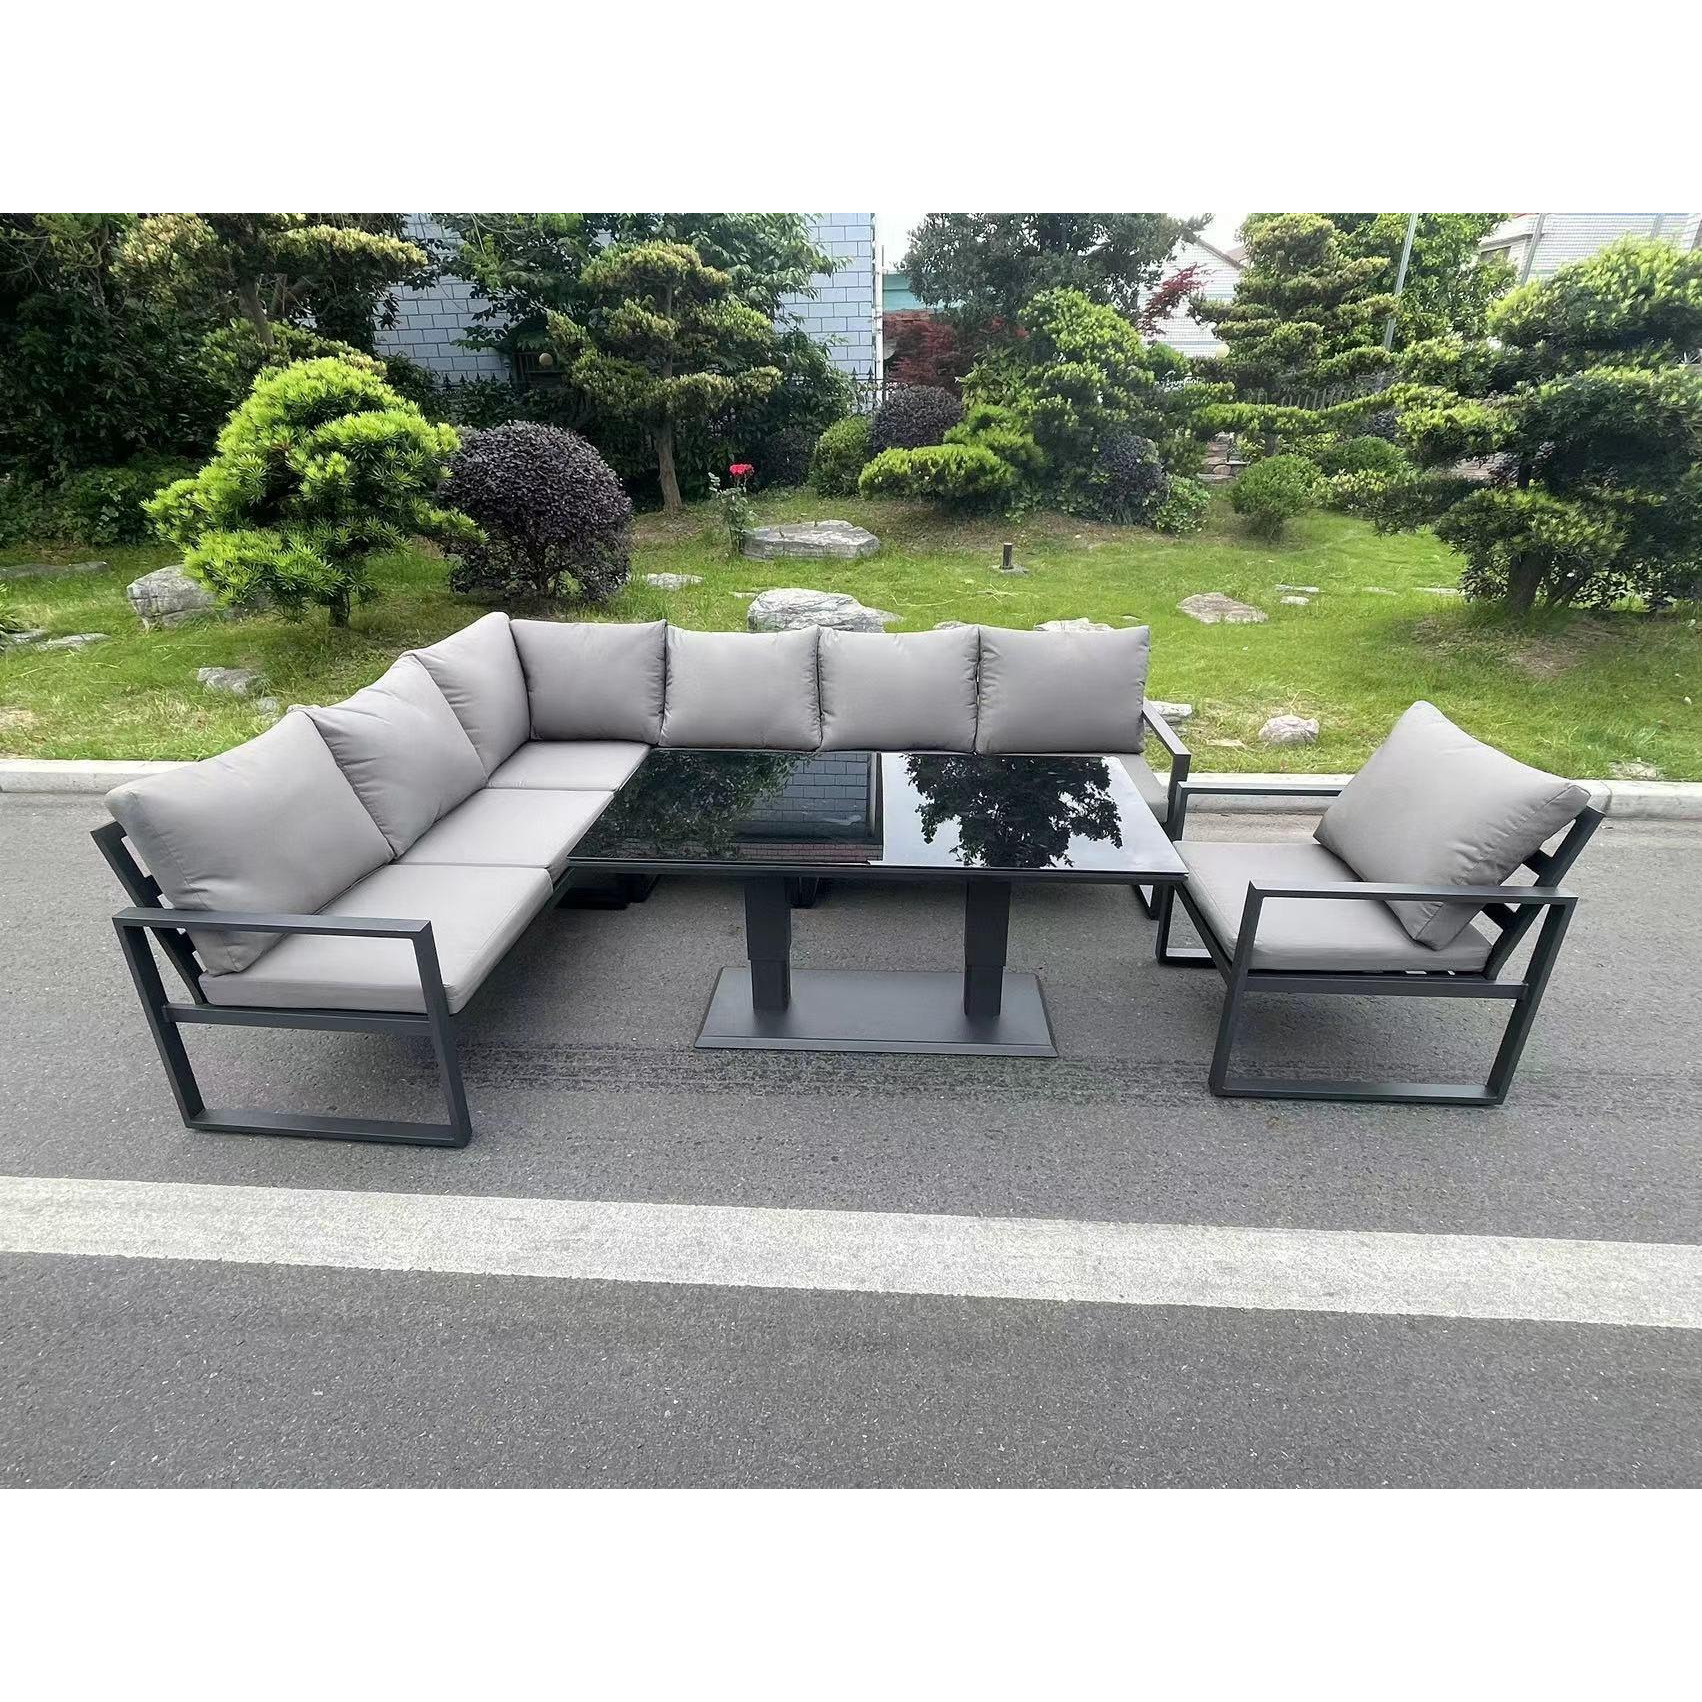 Aluminum Outdoor Garden Furniture Corner Sofa Chair Adjustable Rising Lifting Dining Table Sets Dark Grey Black Tempered Glass 7 Seater - image 1